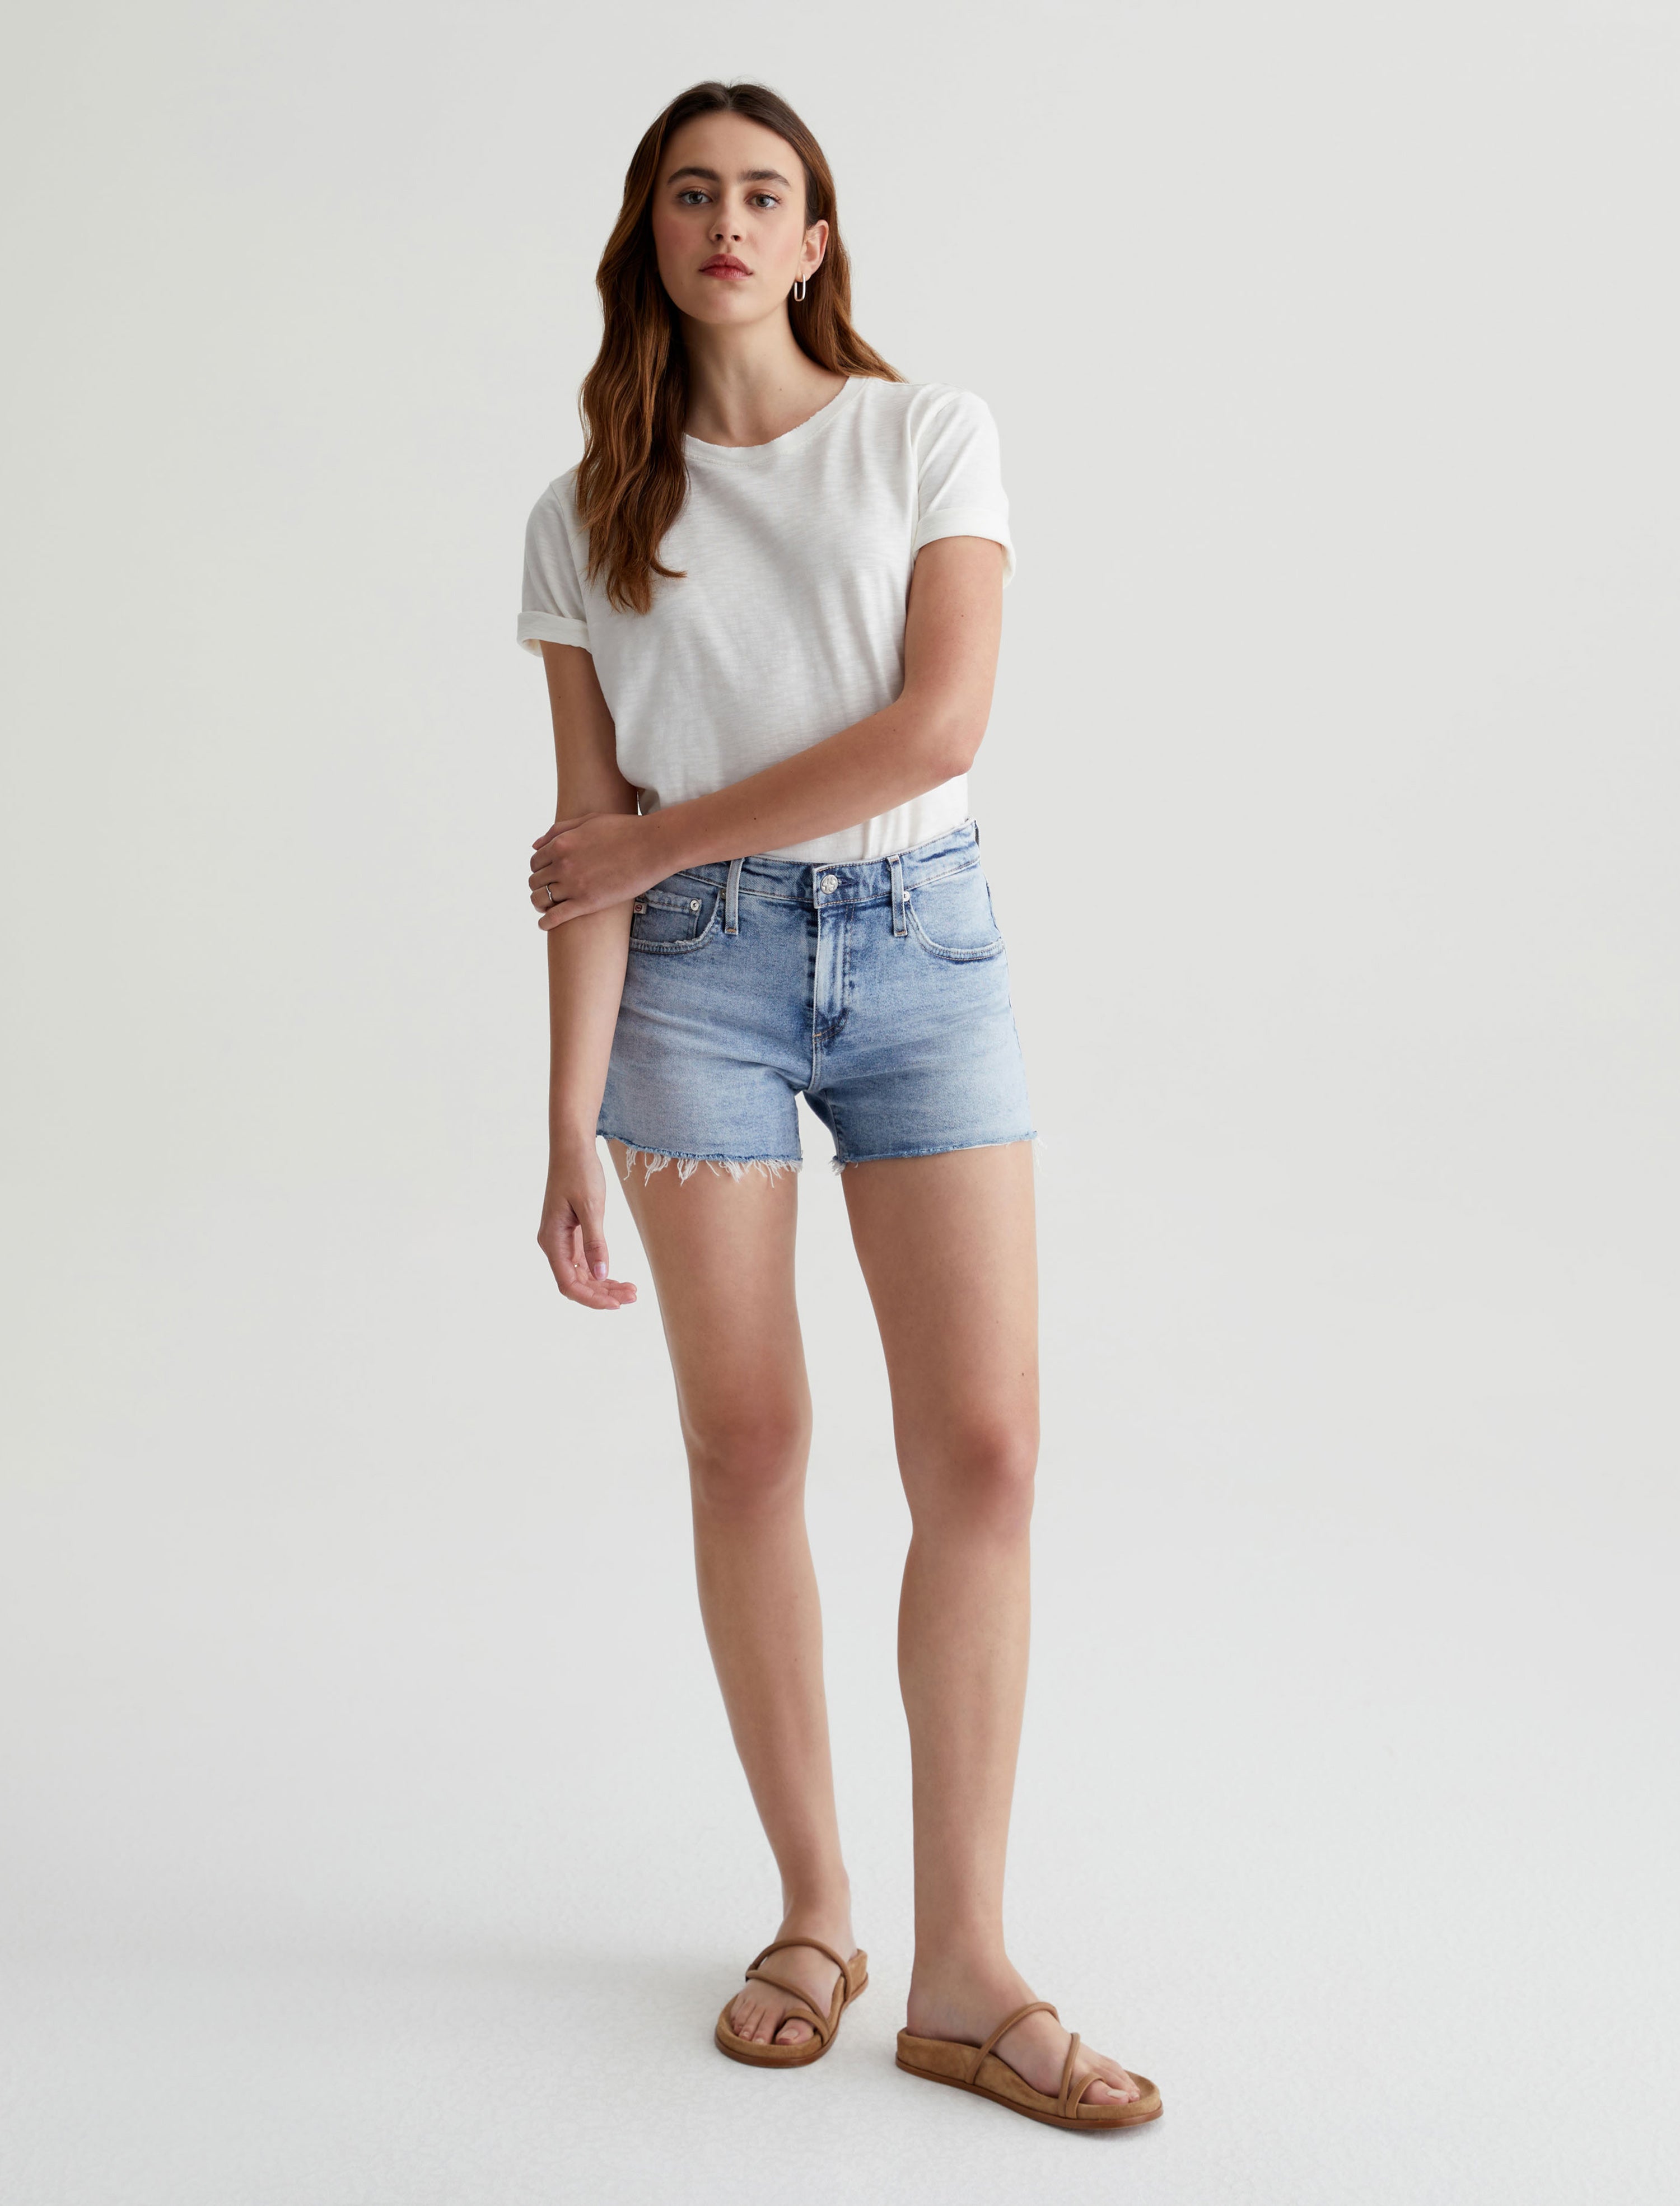 So Cheeky - Denim Shorts for Women | Billabong